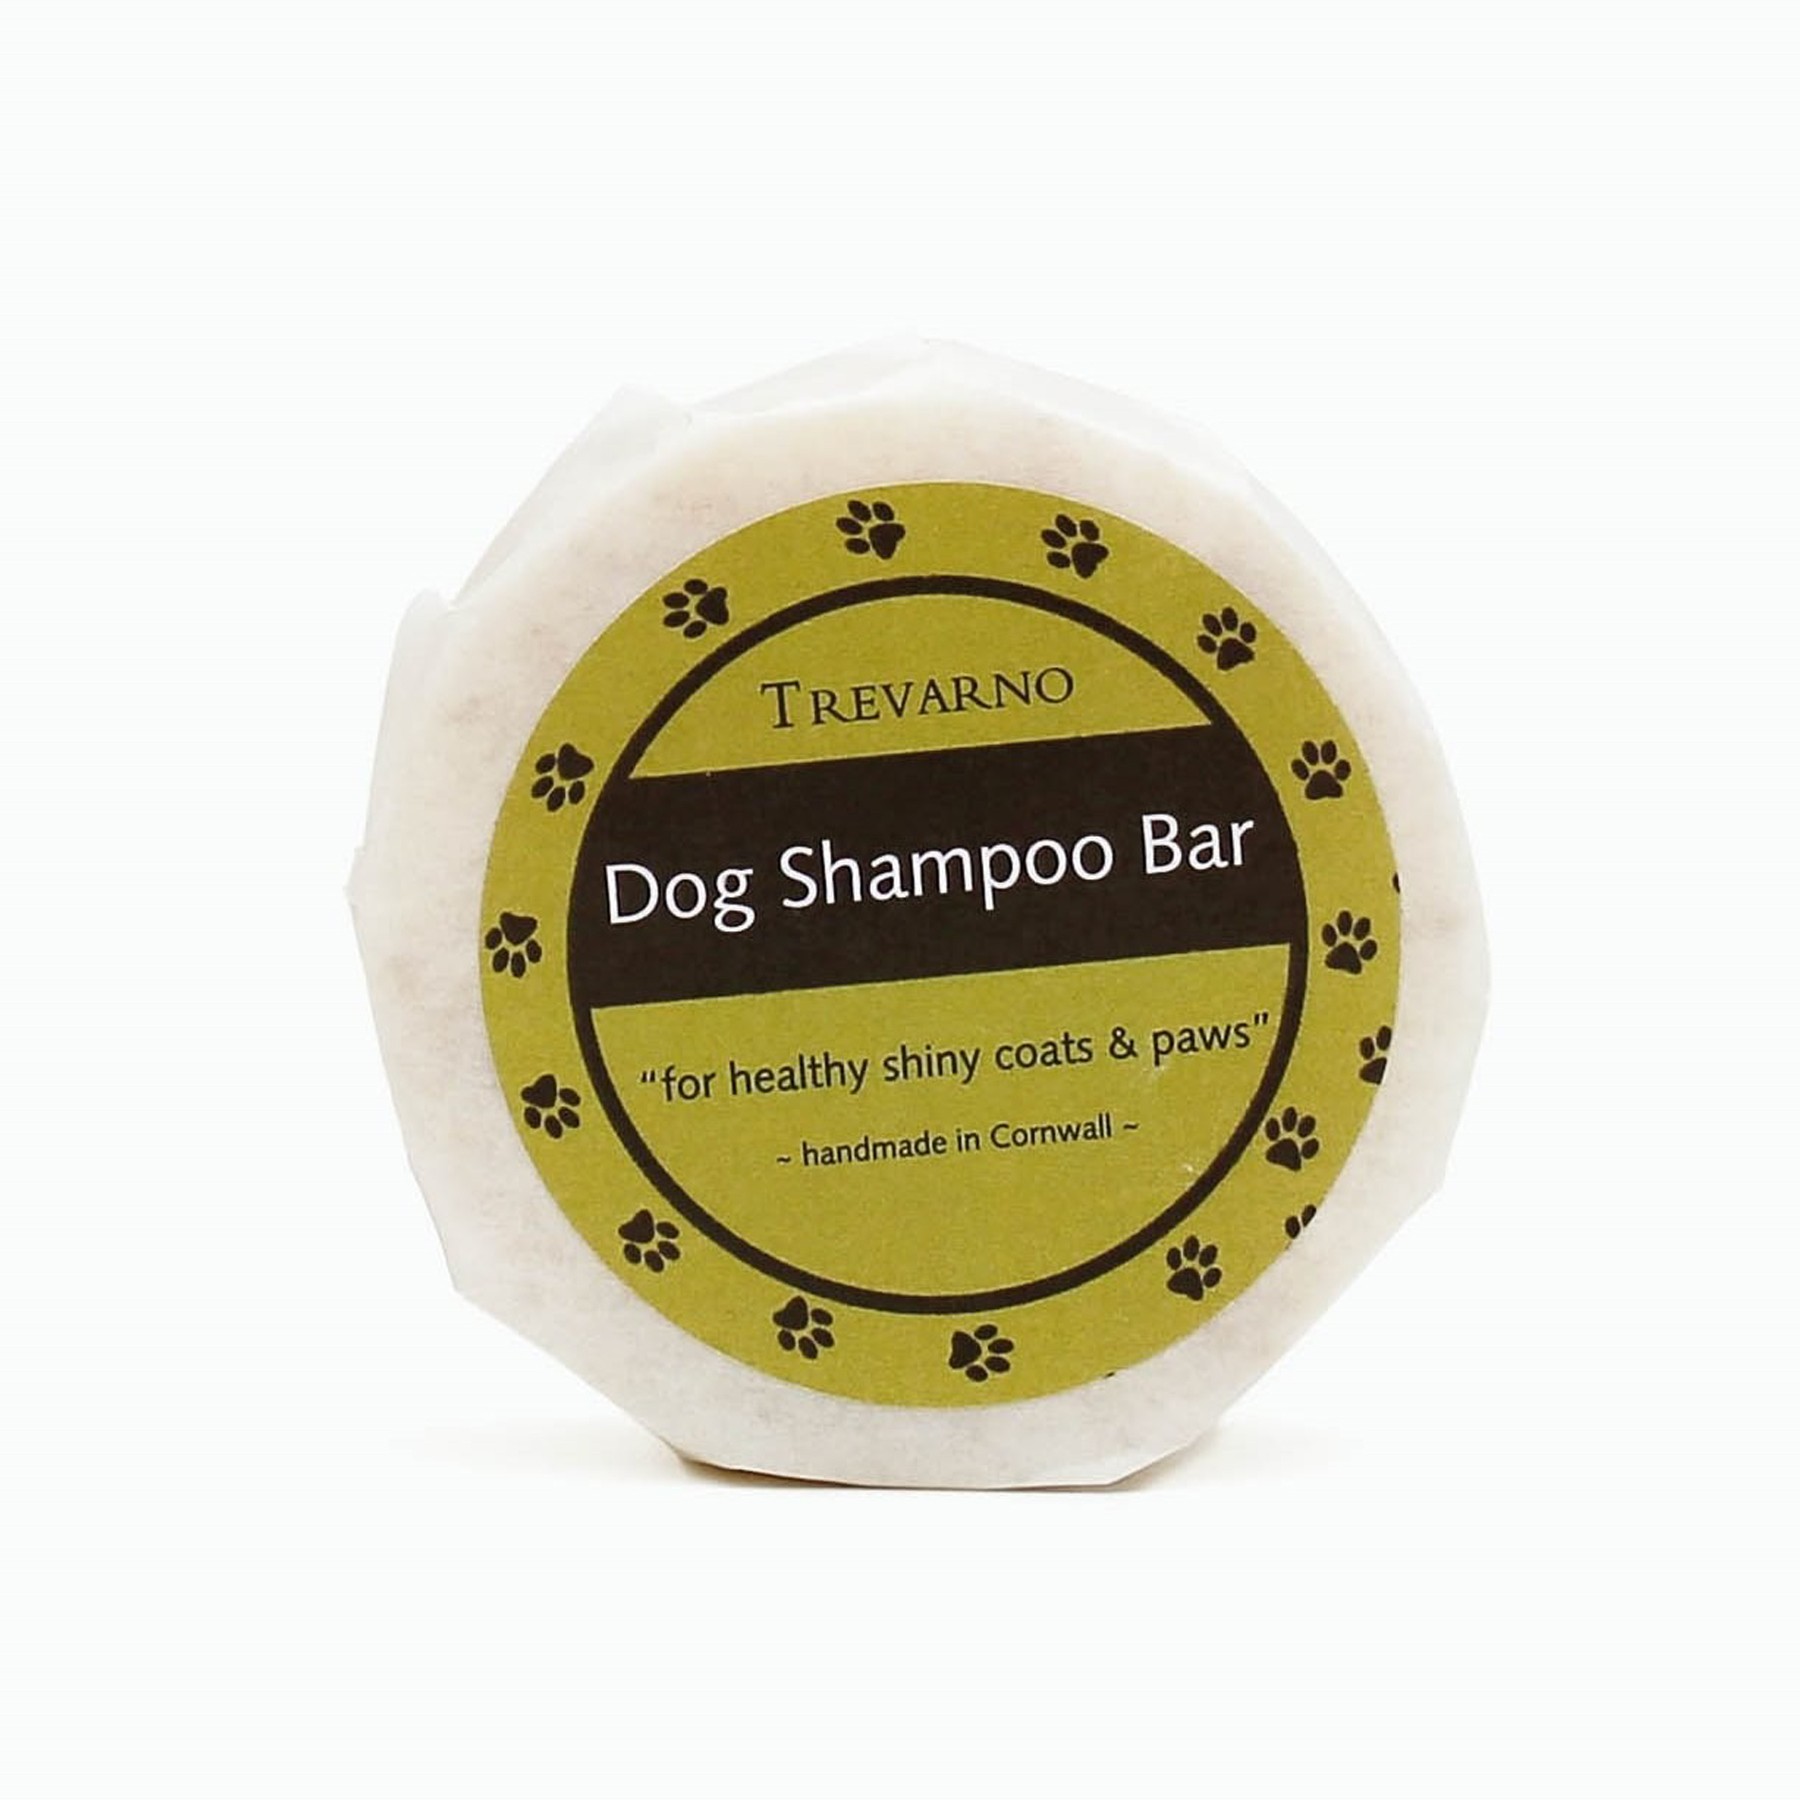 Trevarno Dog Shampoo Bar